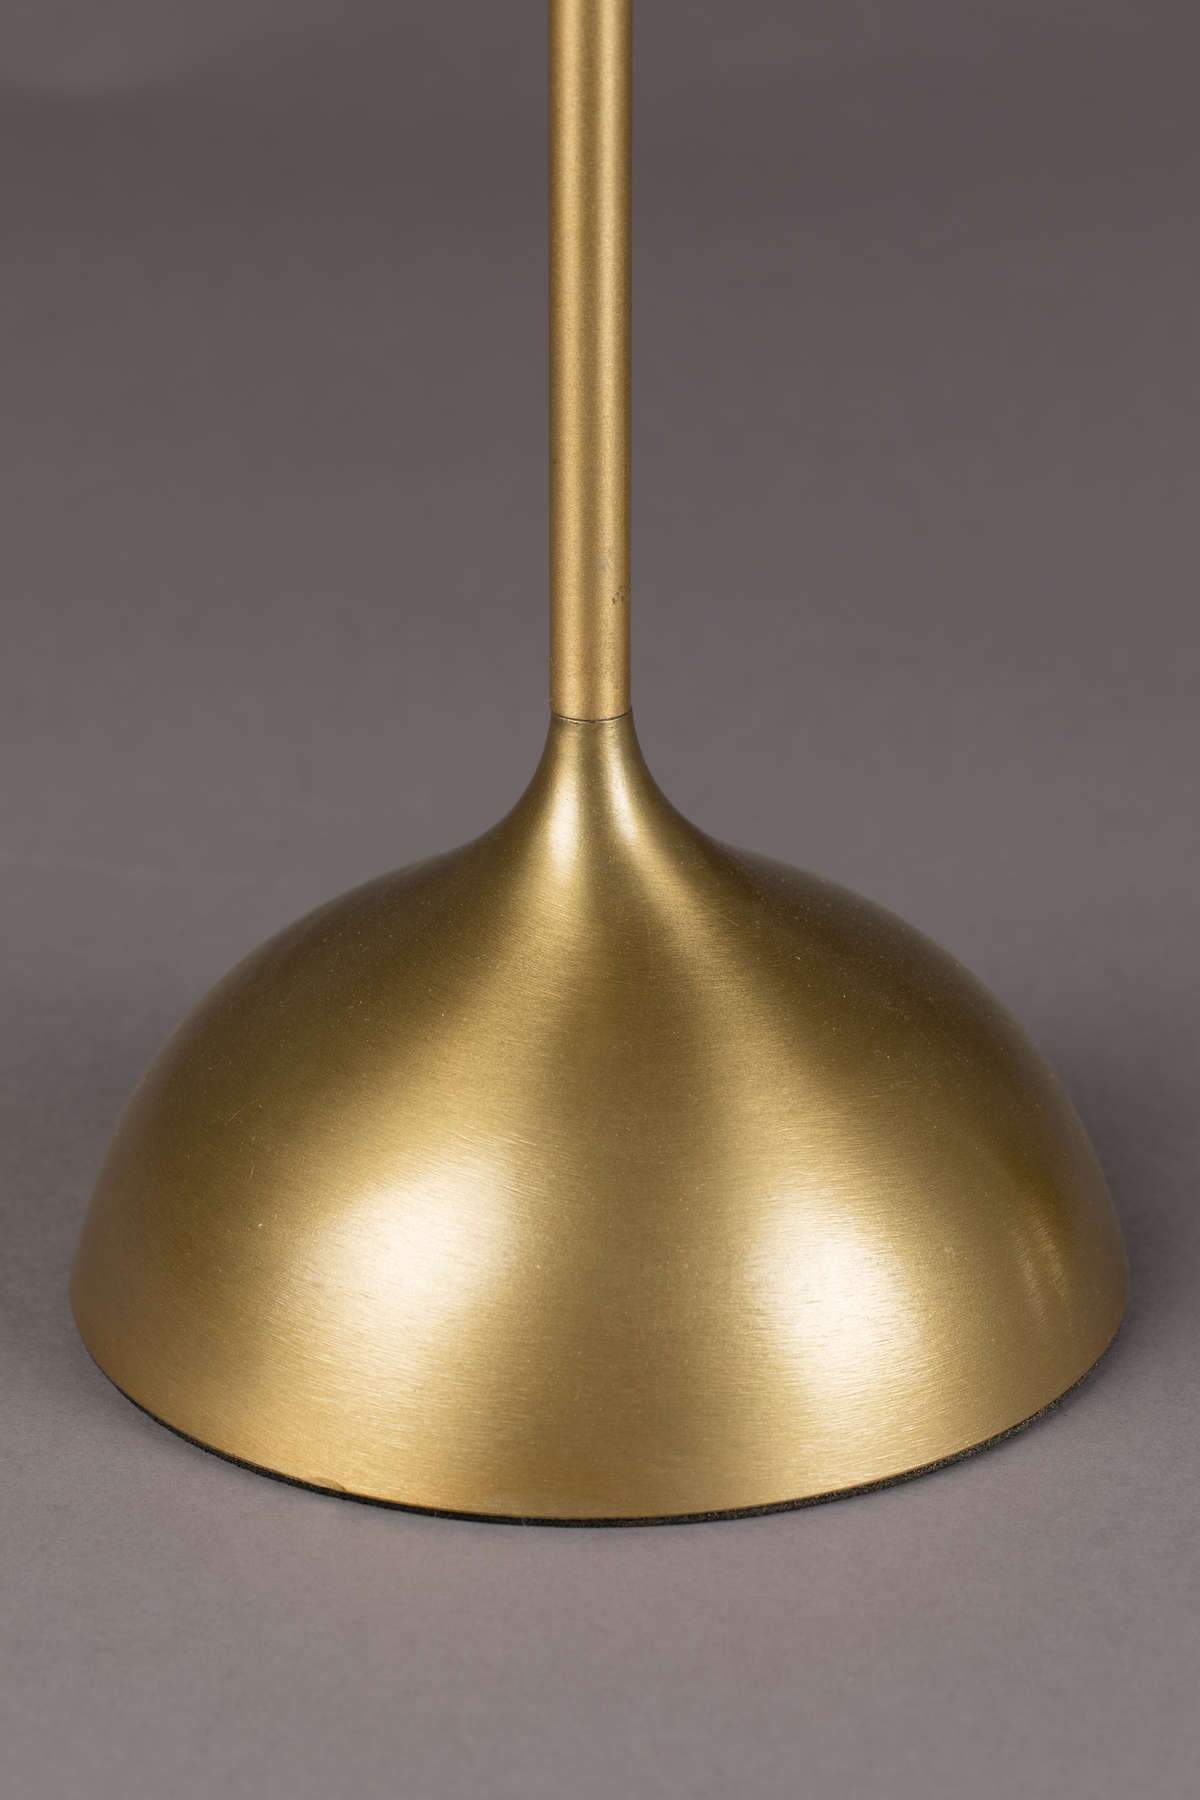 SESTA gold candle holders (3 pcs.), Dutchbone, Eye on Design